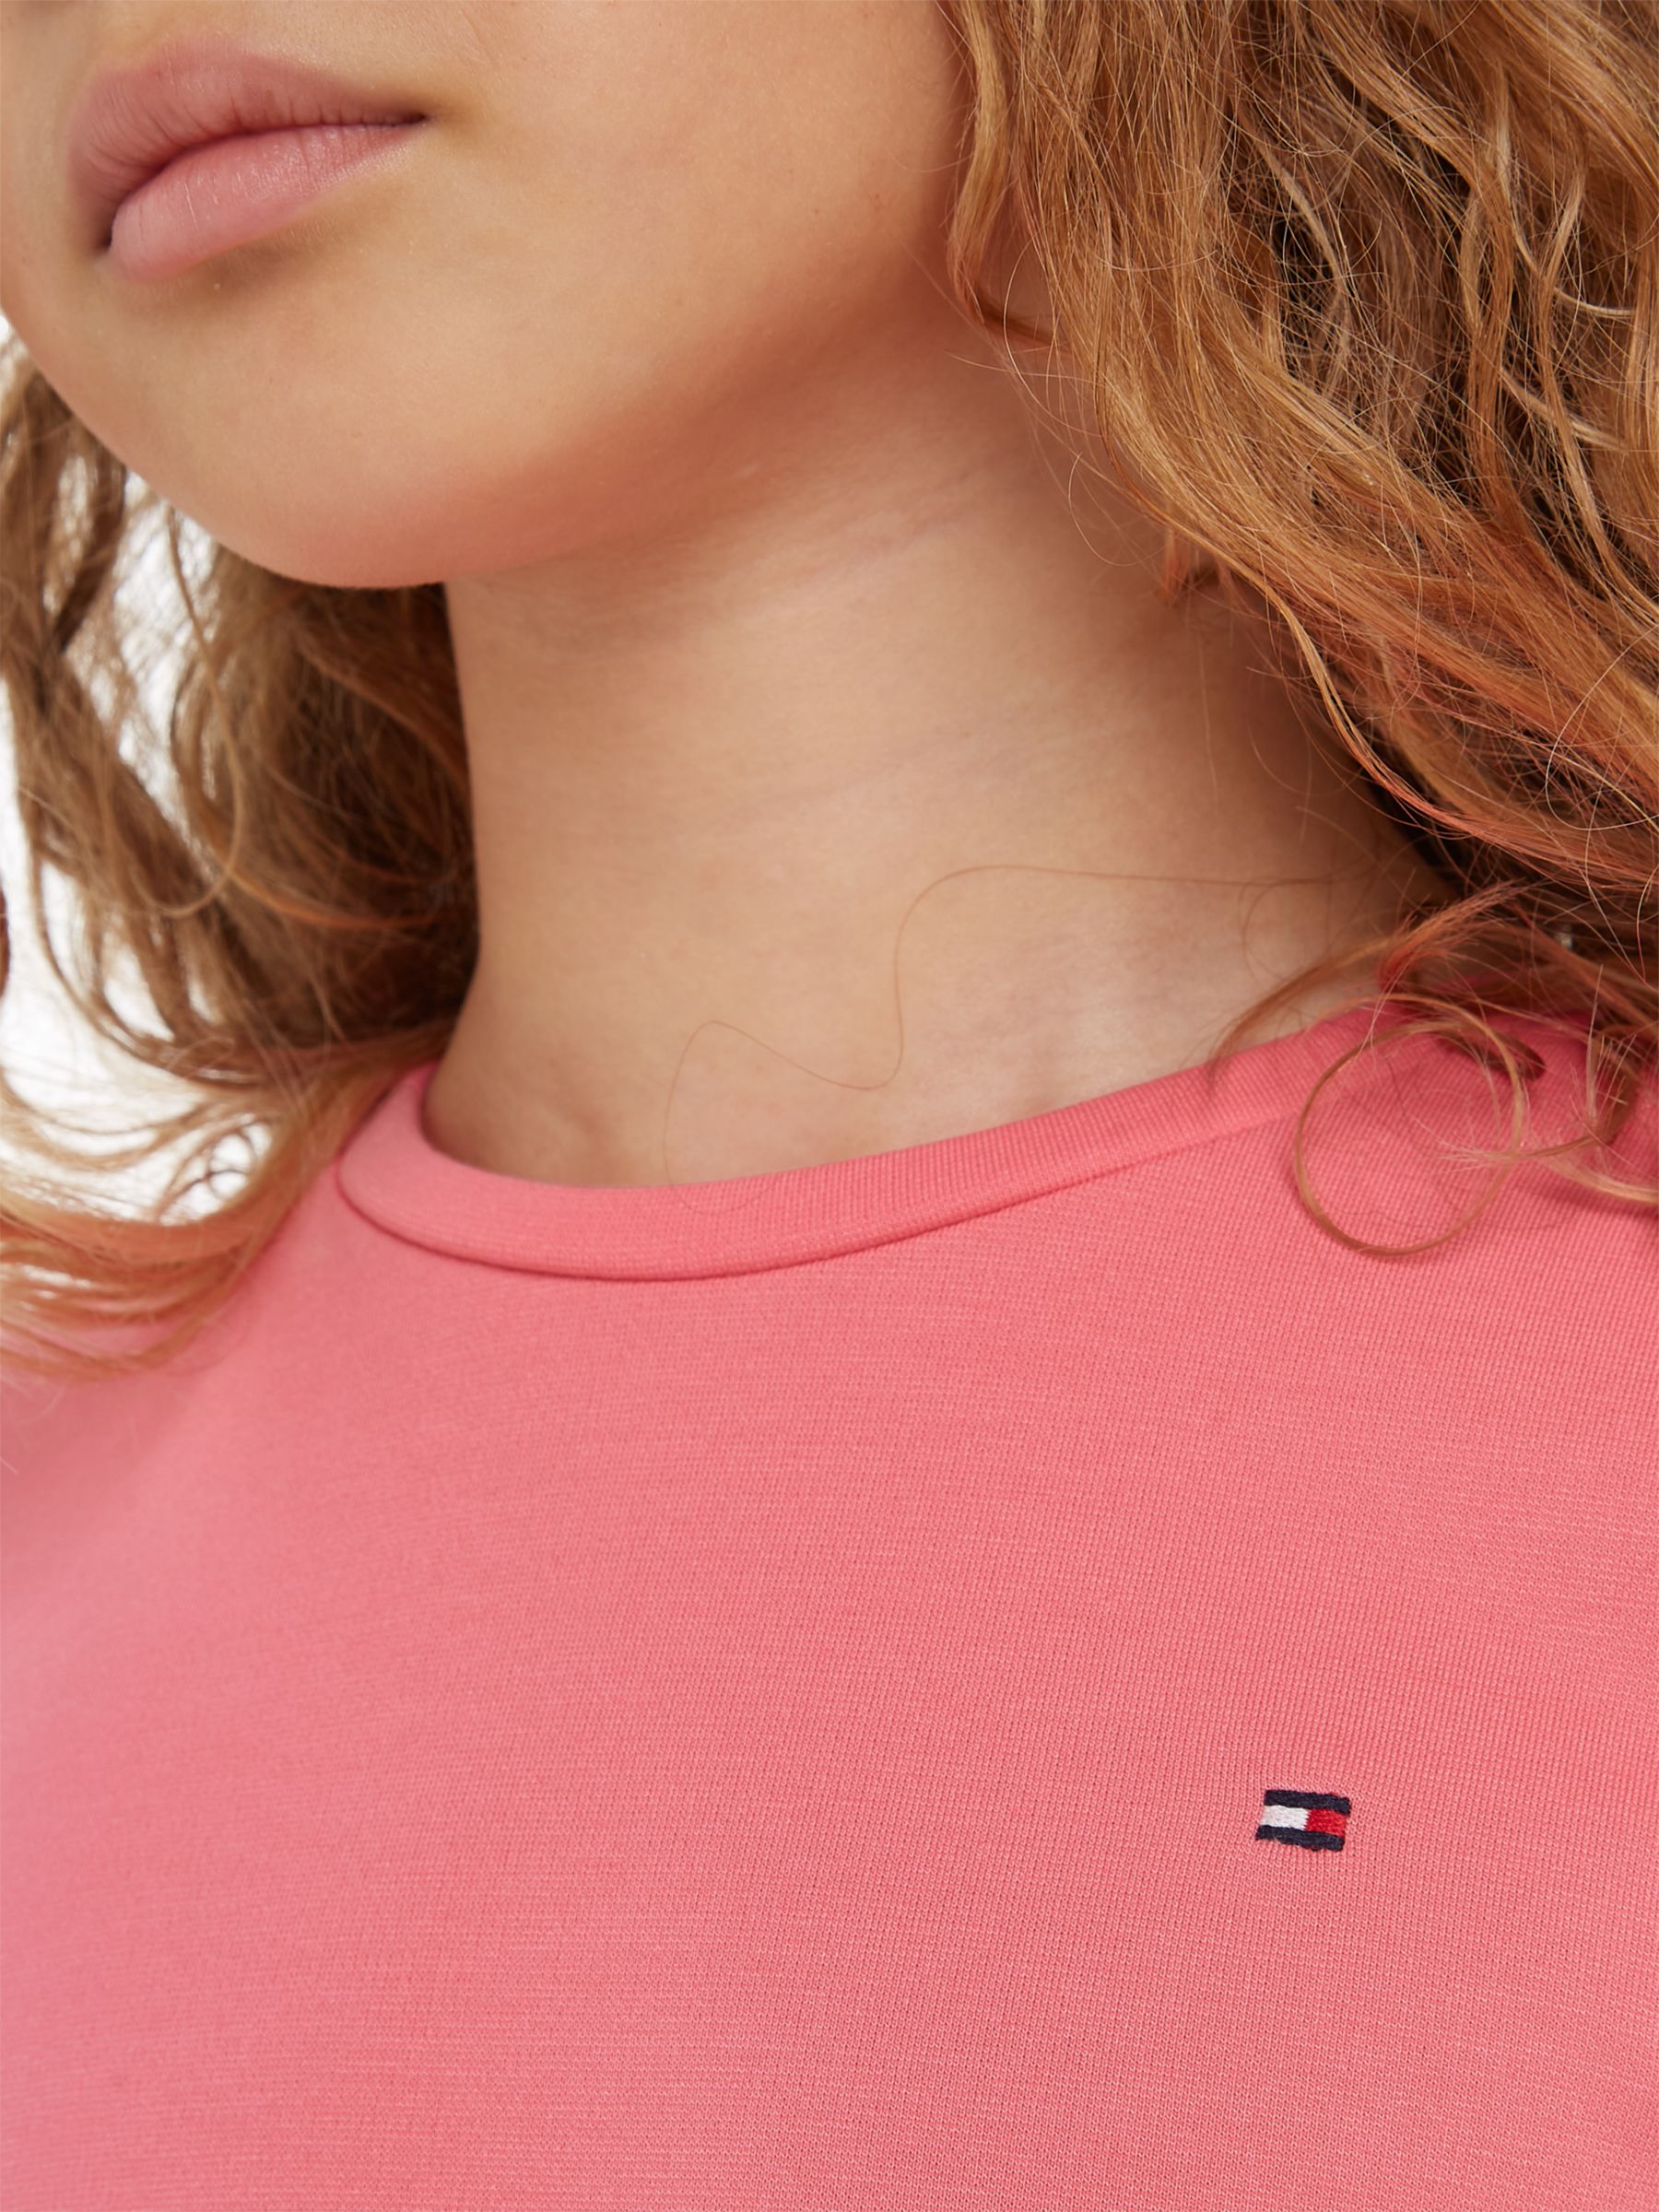 Tommy Hilfiger Kids' Essential Logo Belted Skater Dress, Glamour Pink, 10 years